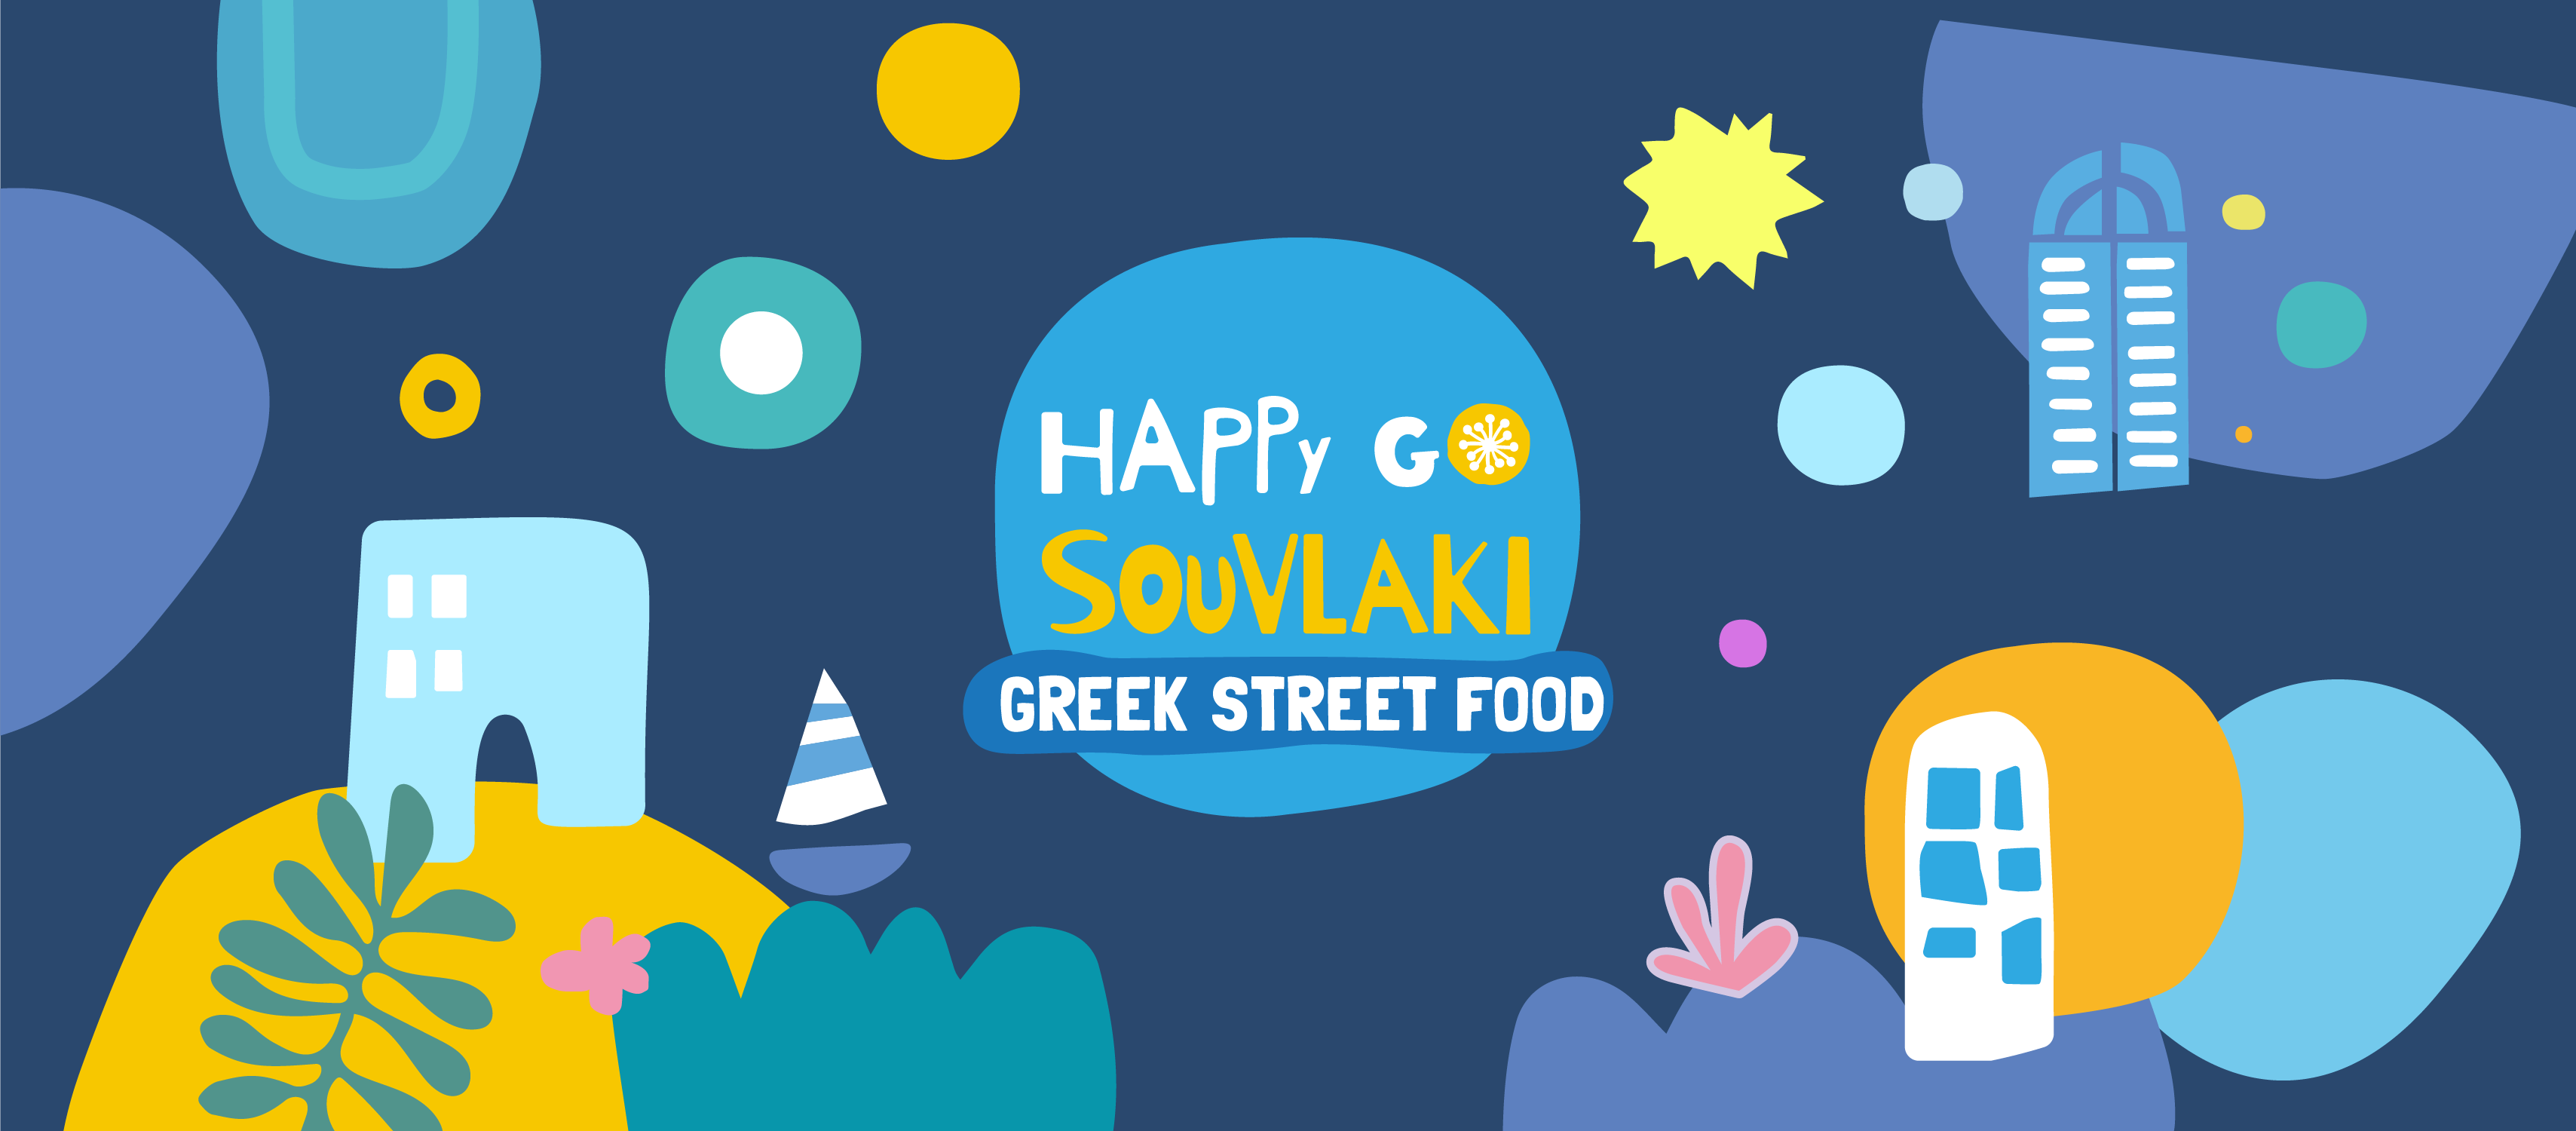 Happy Go Souvlaki